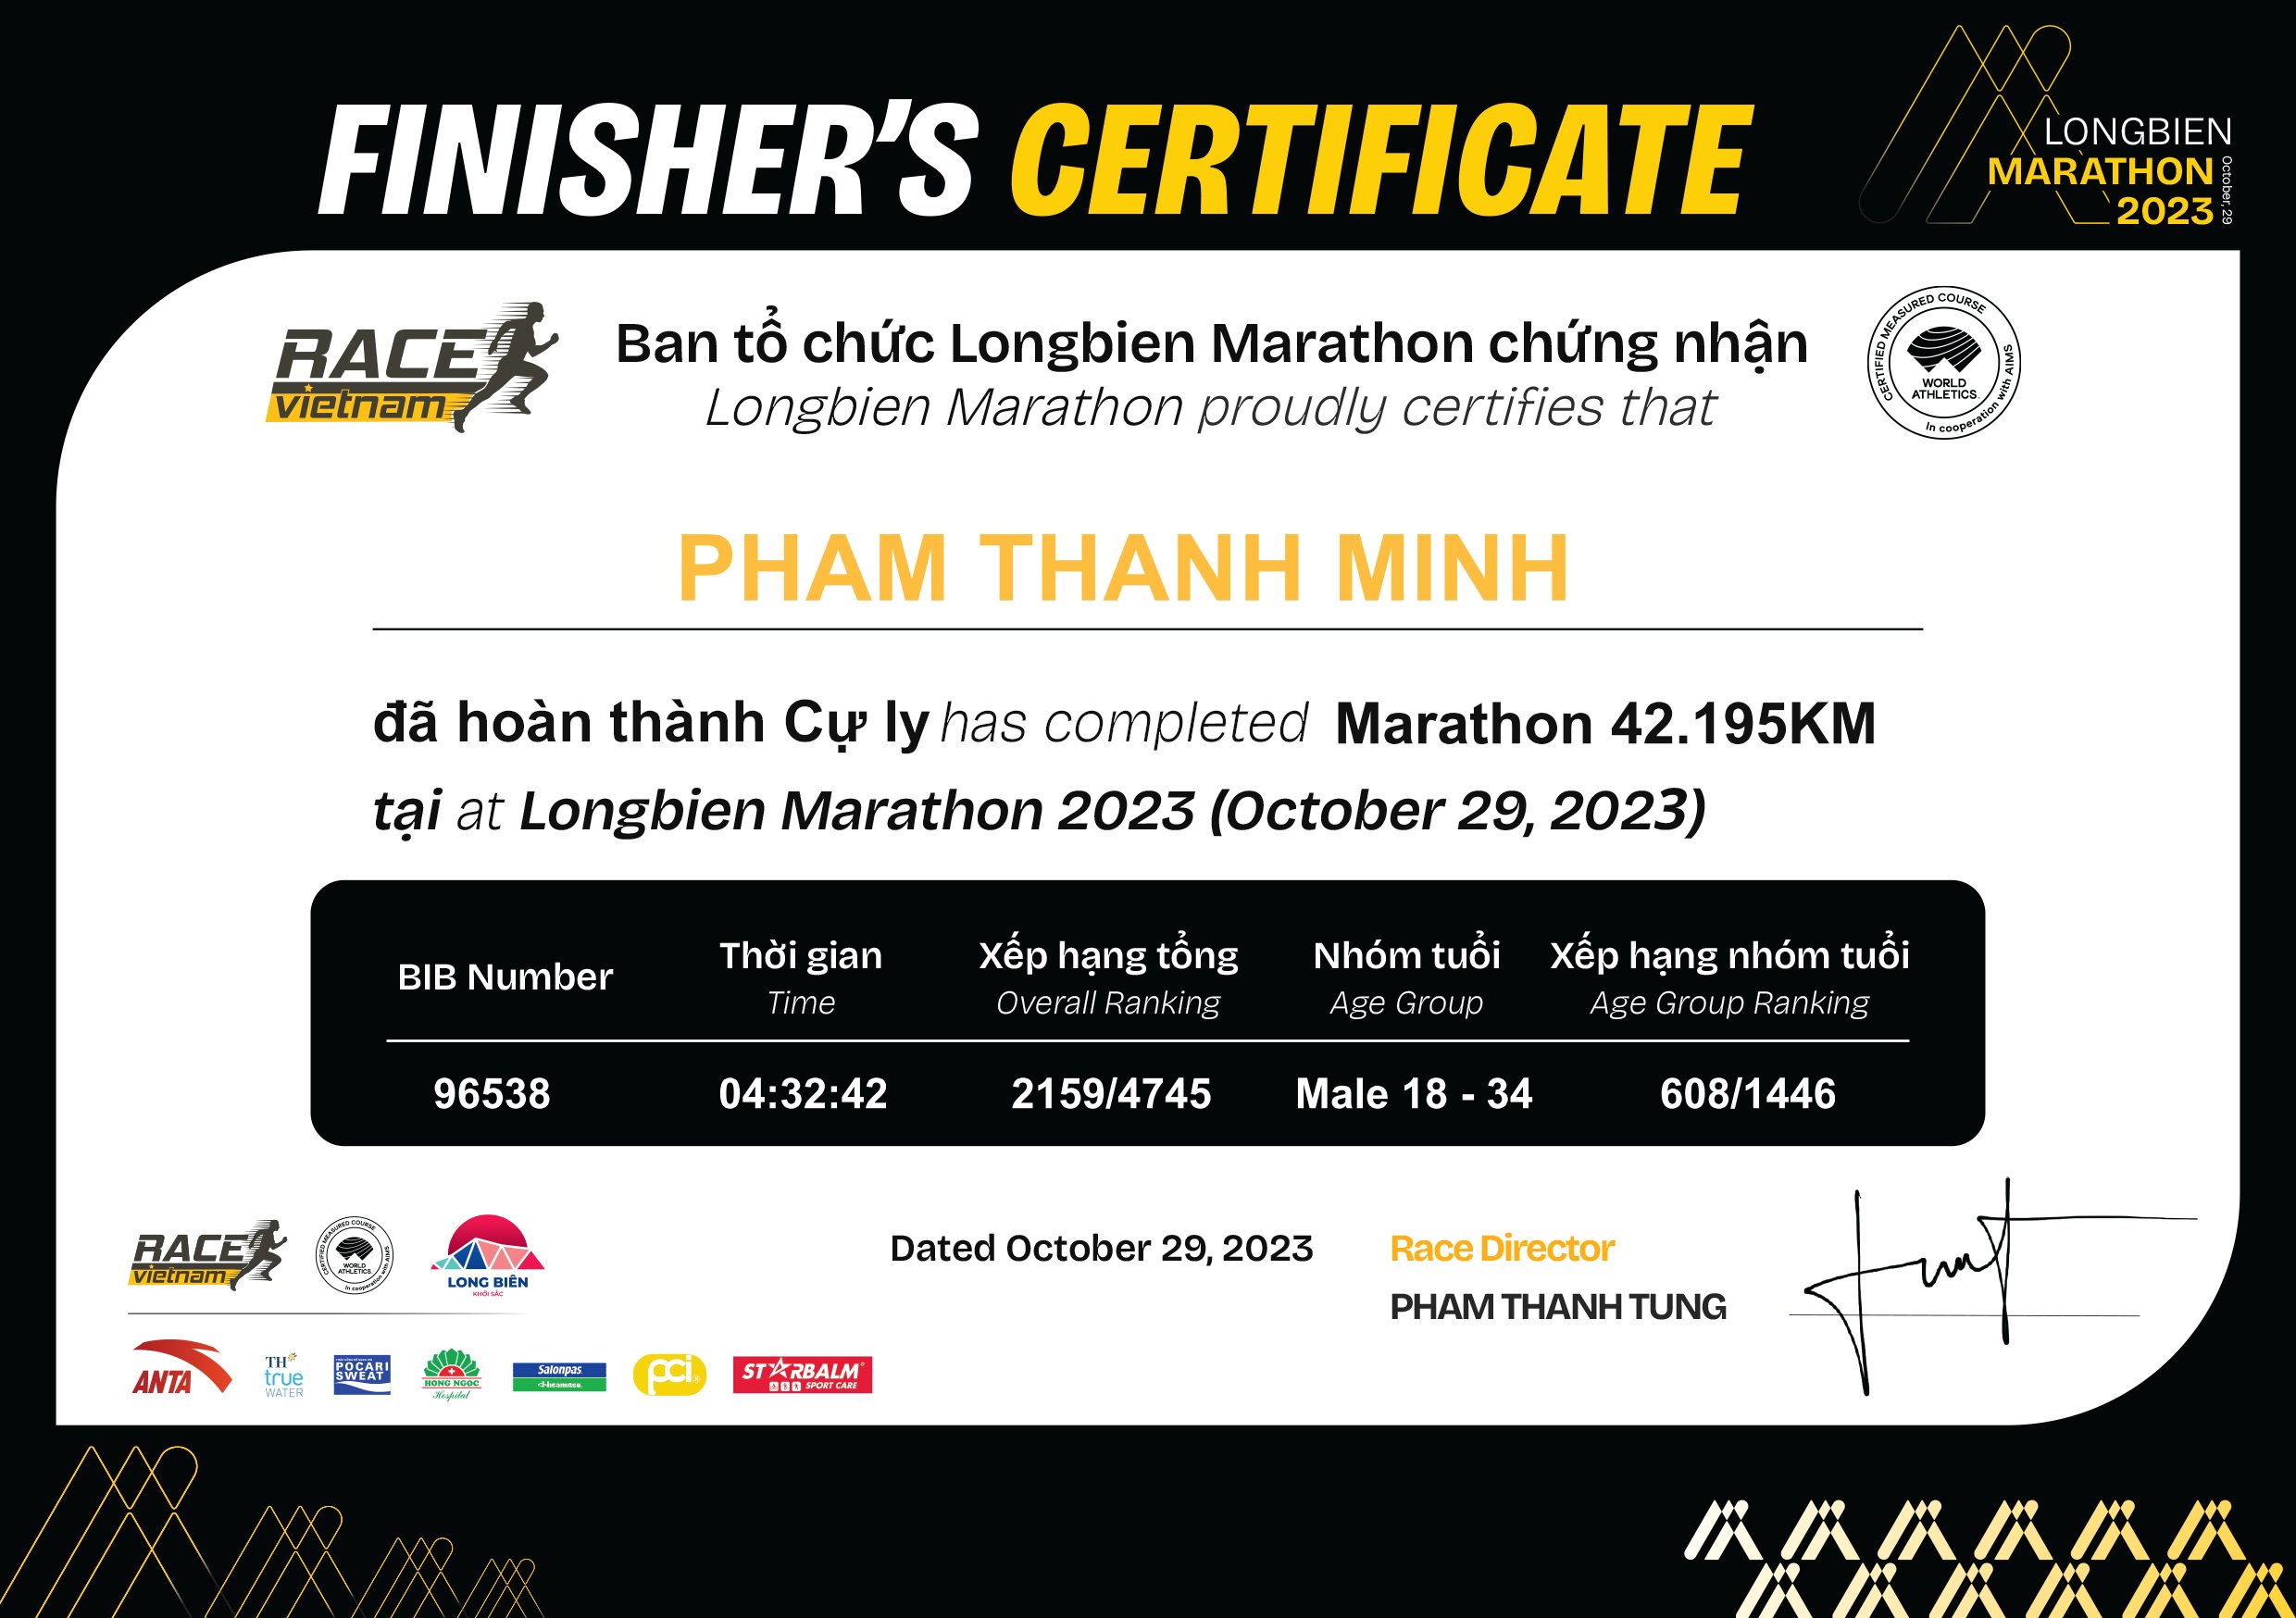 96538 - Pham Thanh Minh